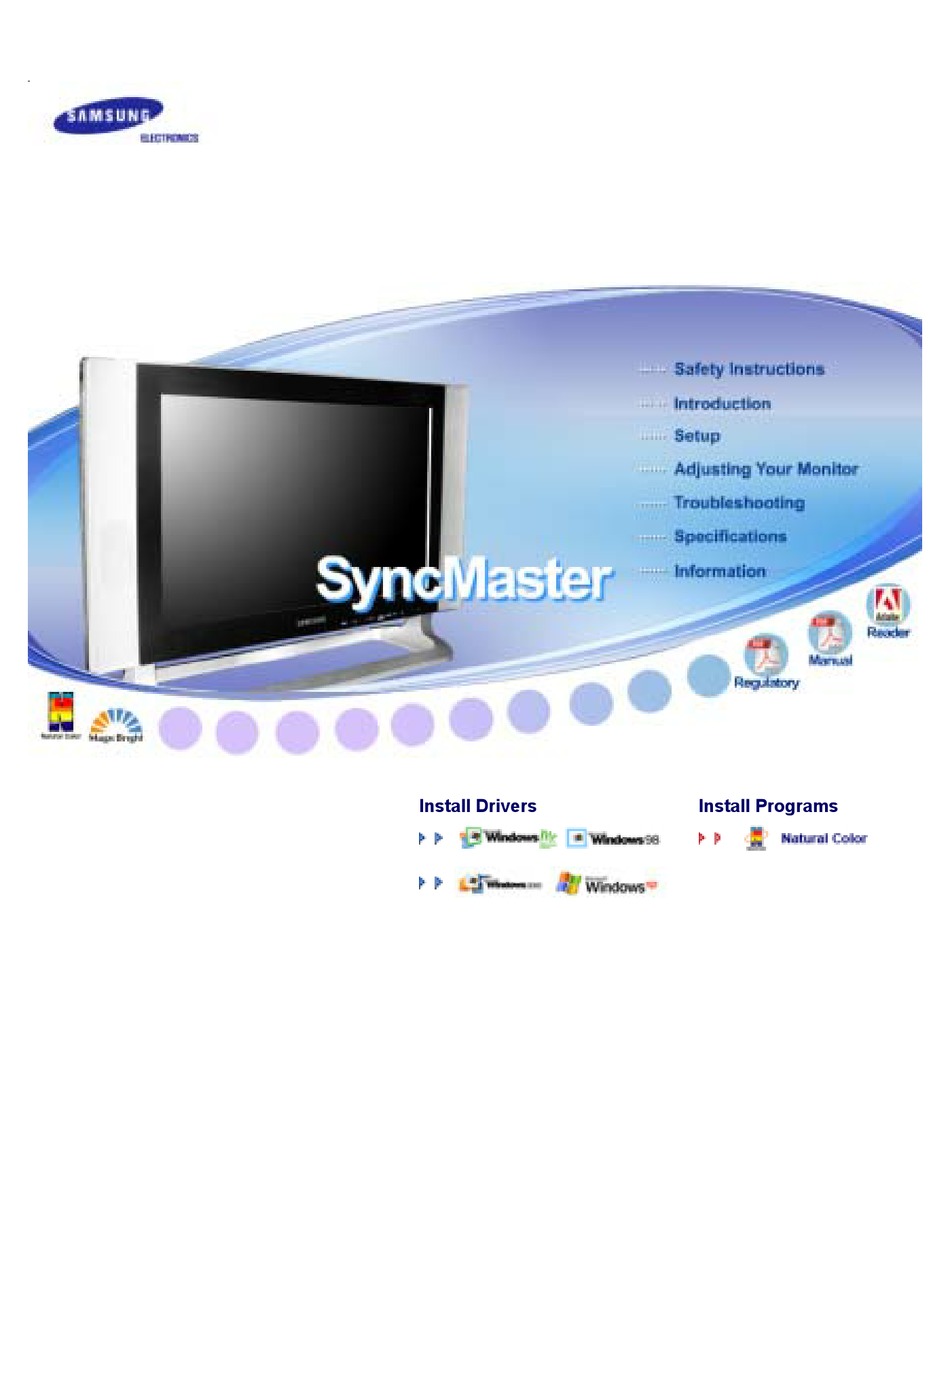 samsung syncmaster 2032bw driver windows 10